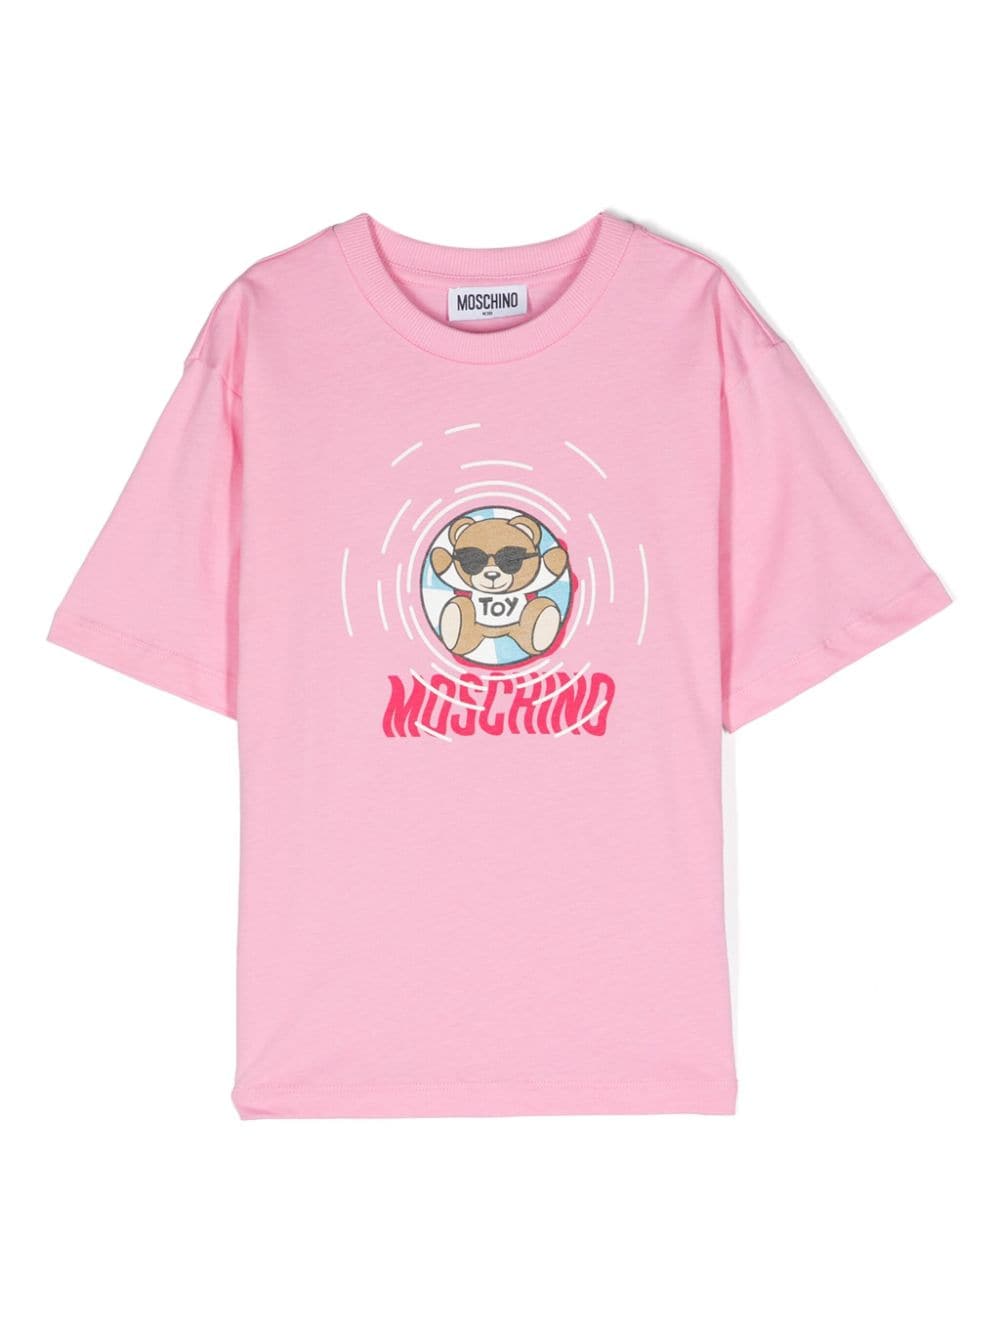 T-shirt bambina rosa pastello